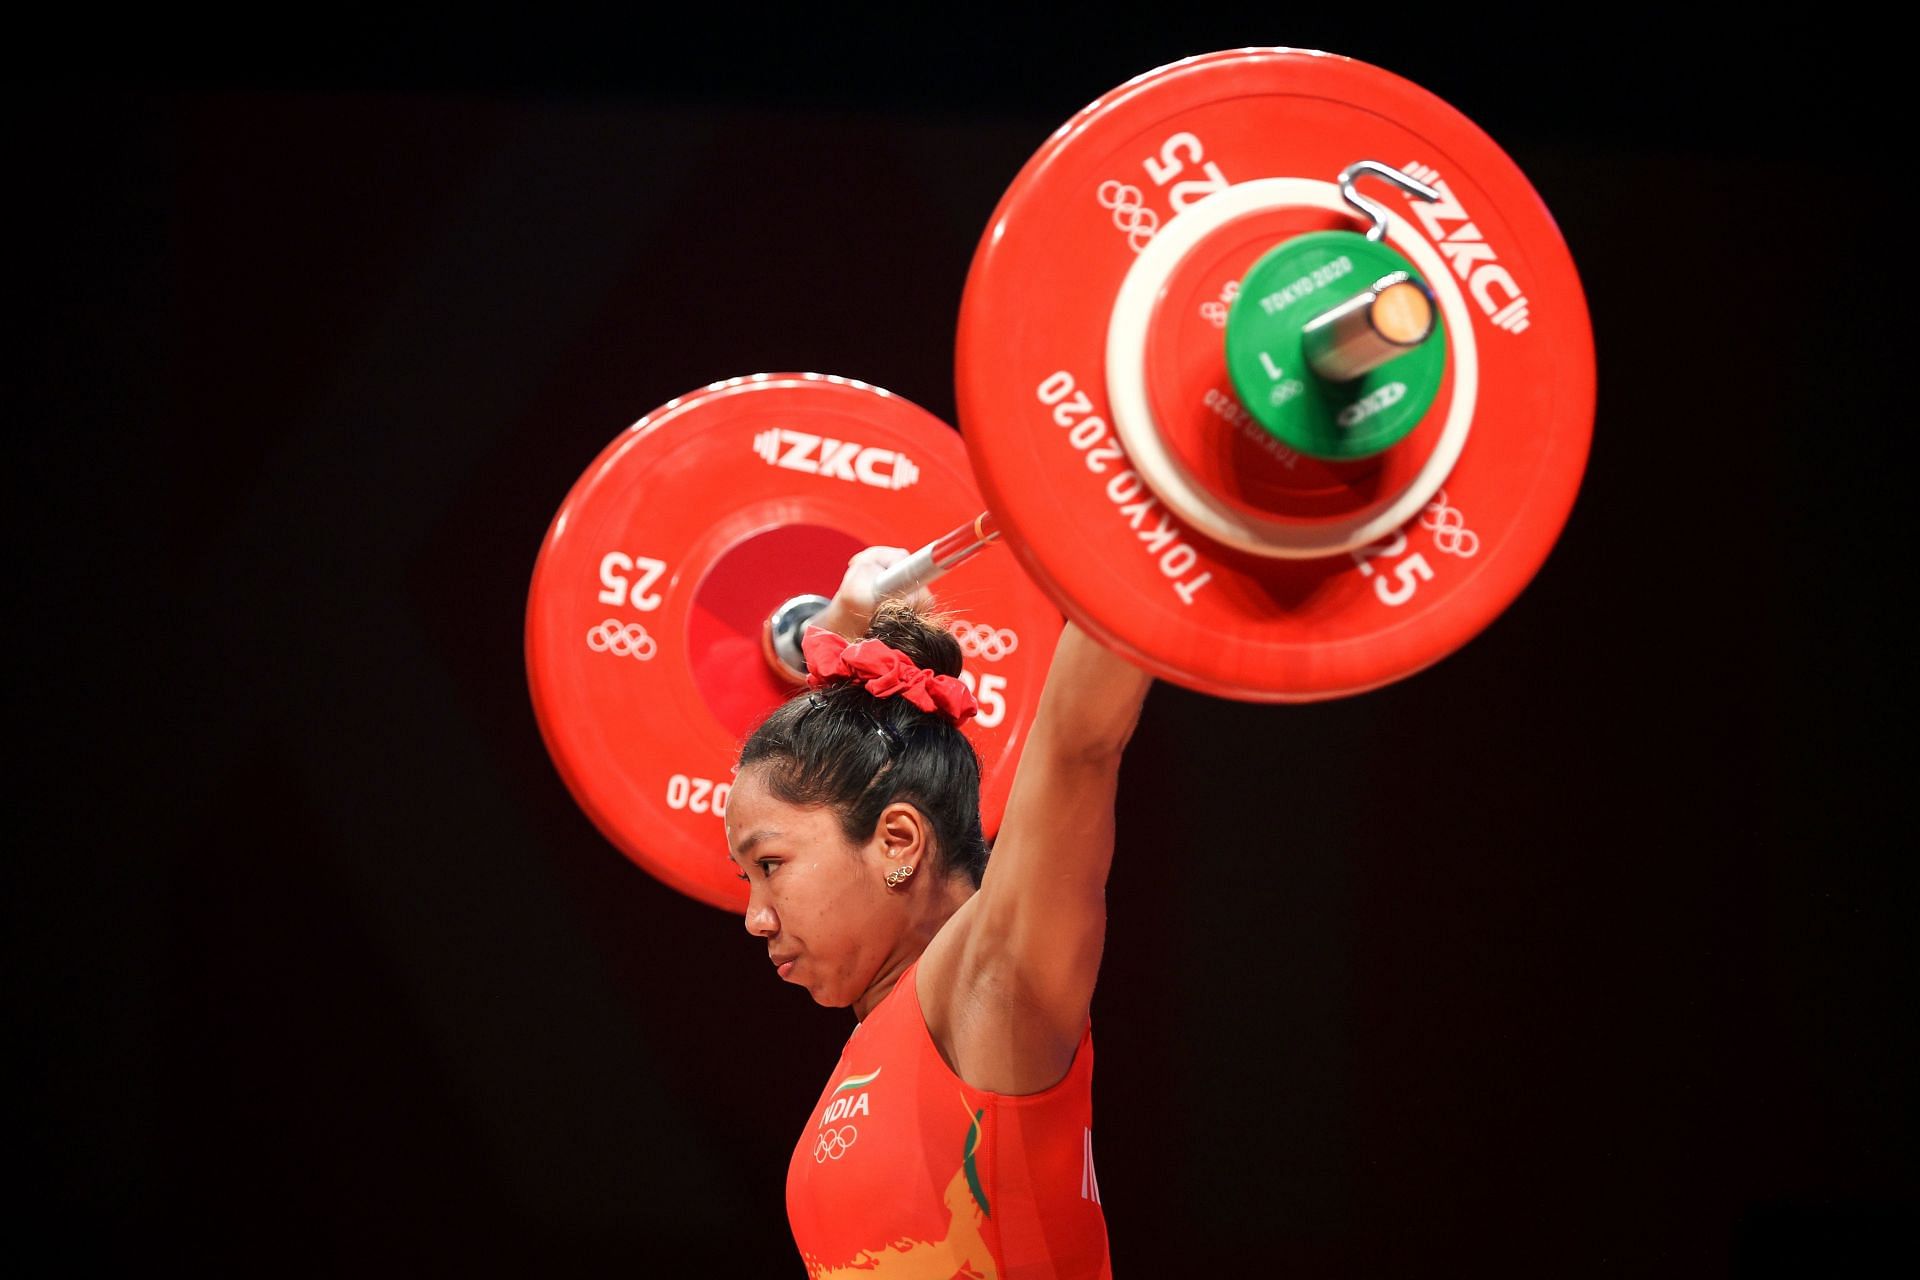 Mirabai Chanu in action during the Tokyo Olympics